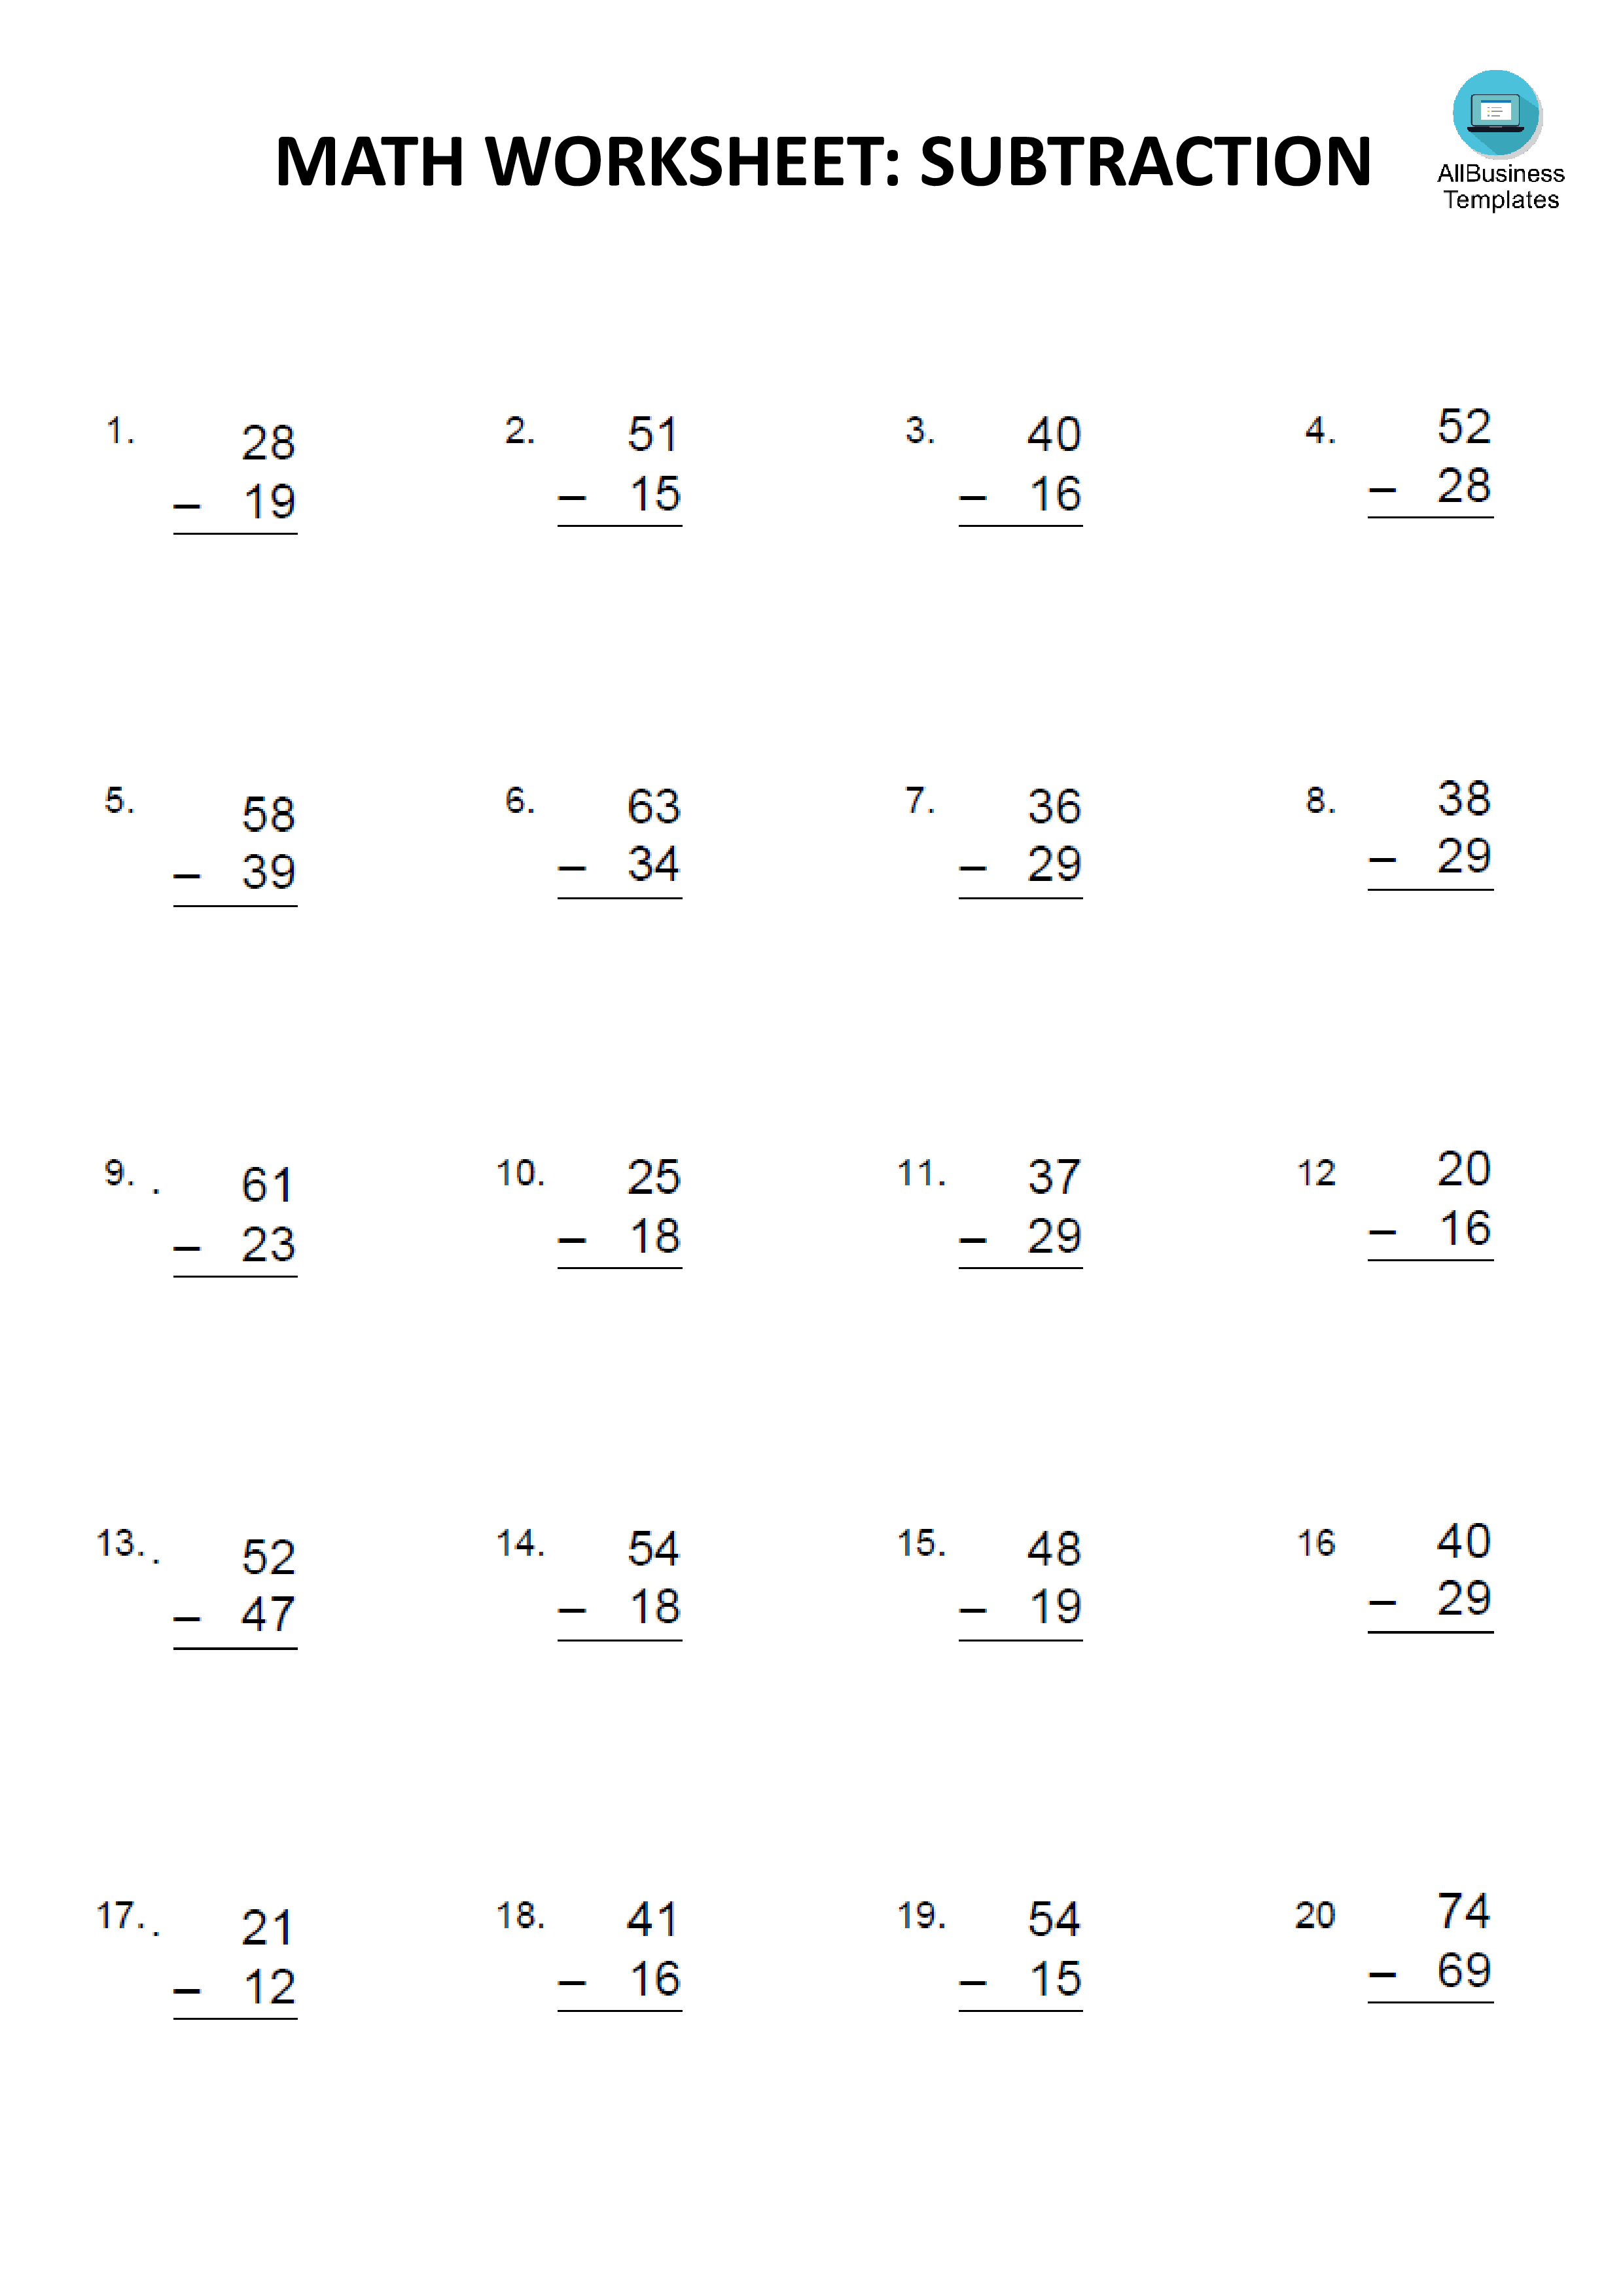 Mathematics Subtract Practicing Worksheet 模板